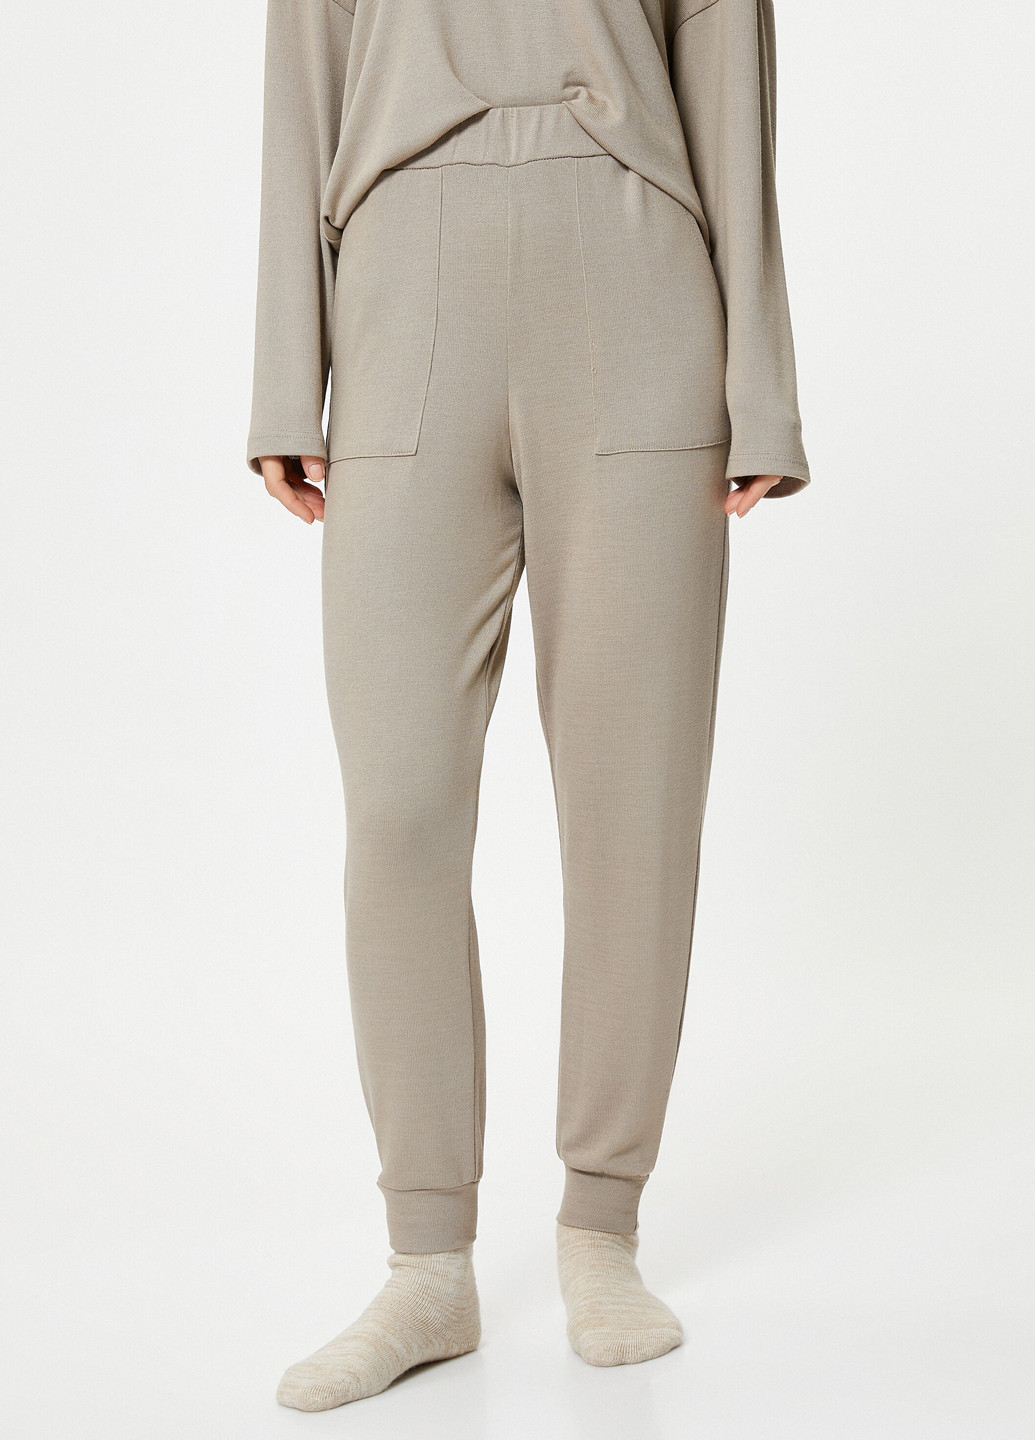 Темно-бежевая всесезон пижама (кофта, брюки) кофта + брюки KOTON